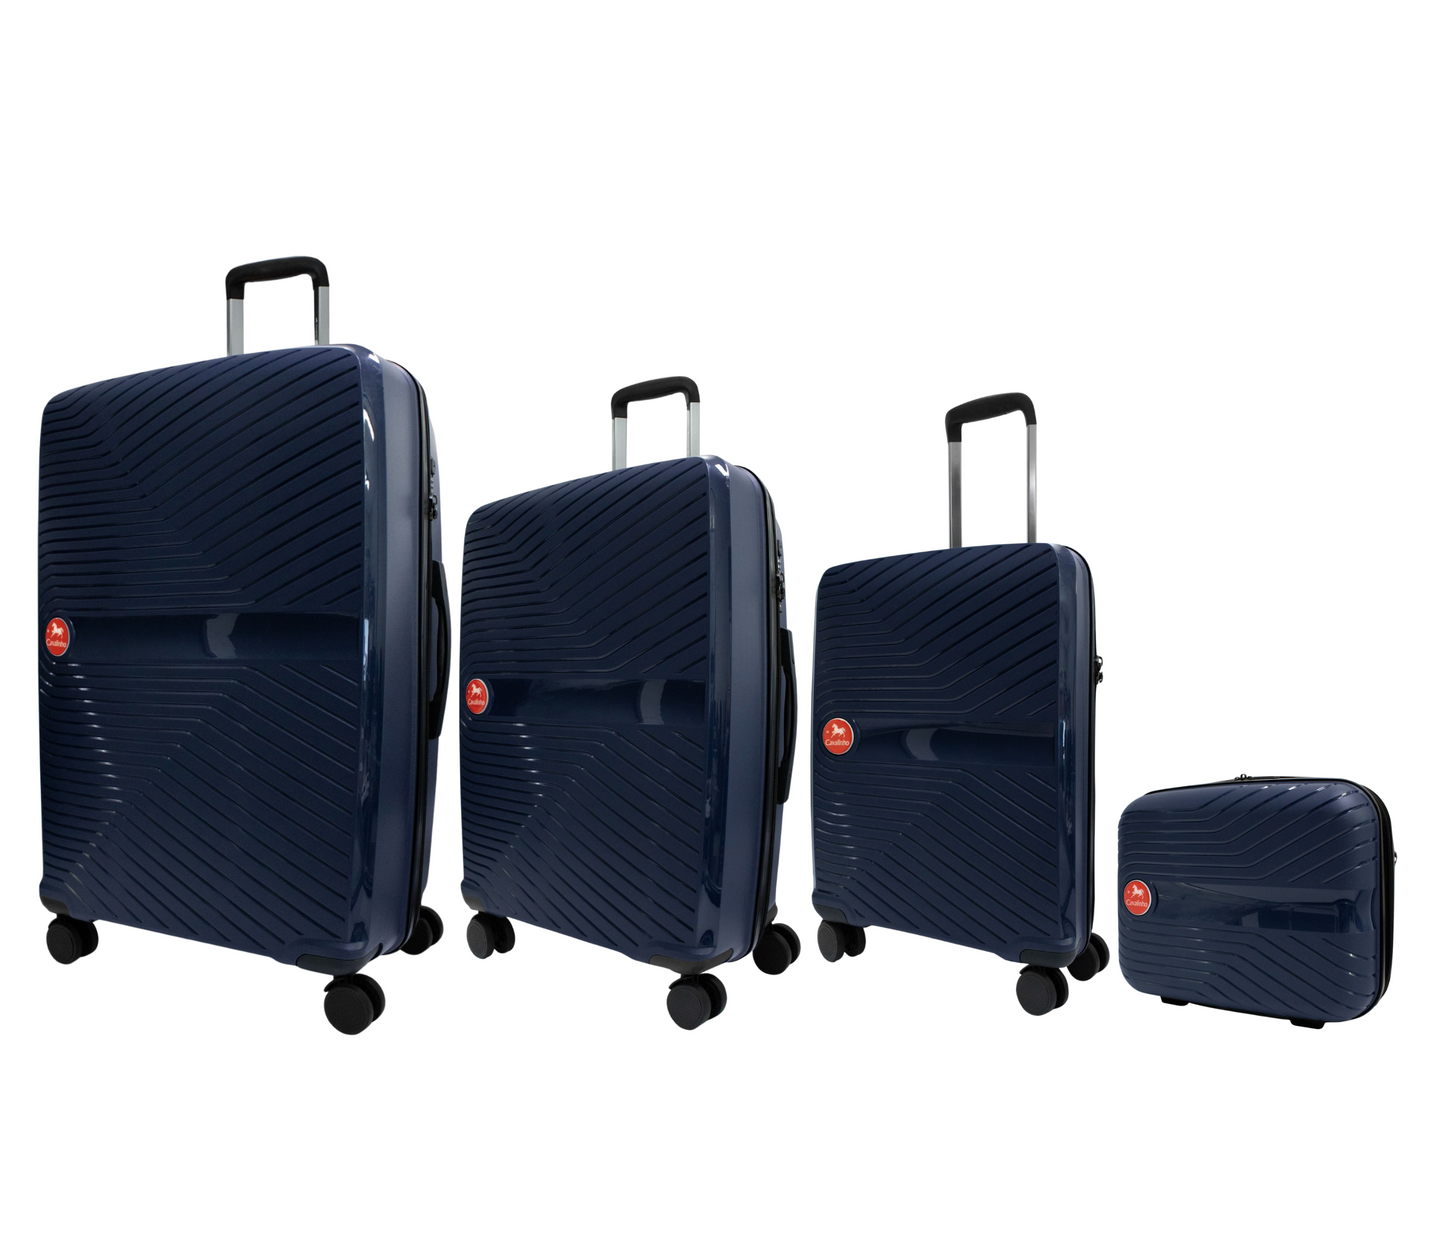 #color_ Navy | Cavalinho Canada & USA 4 Piece Set of Colorful Hardside Luggage (15", 19", 24", 28") - Navy - 68020004.03.S4_2